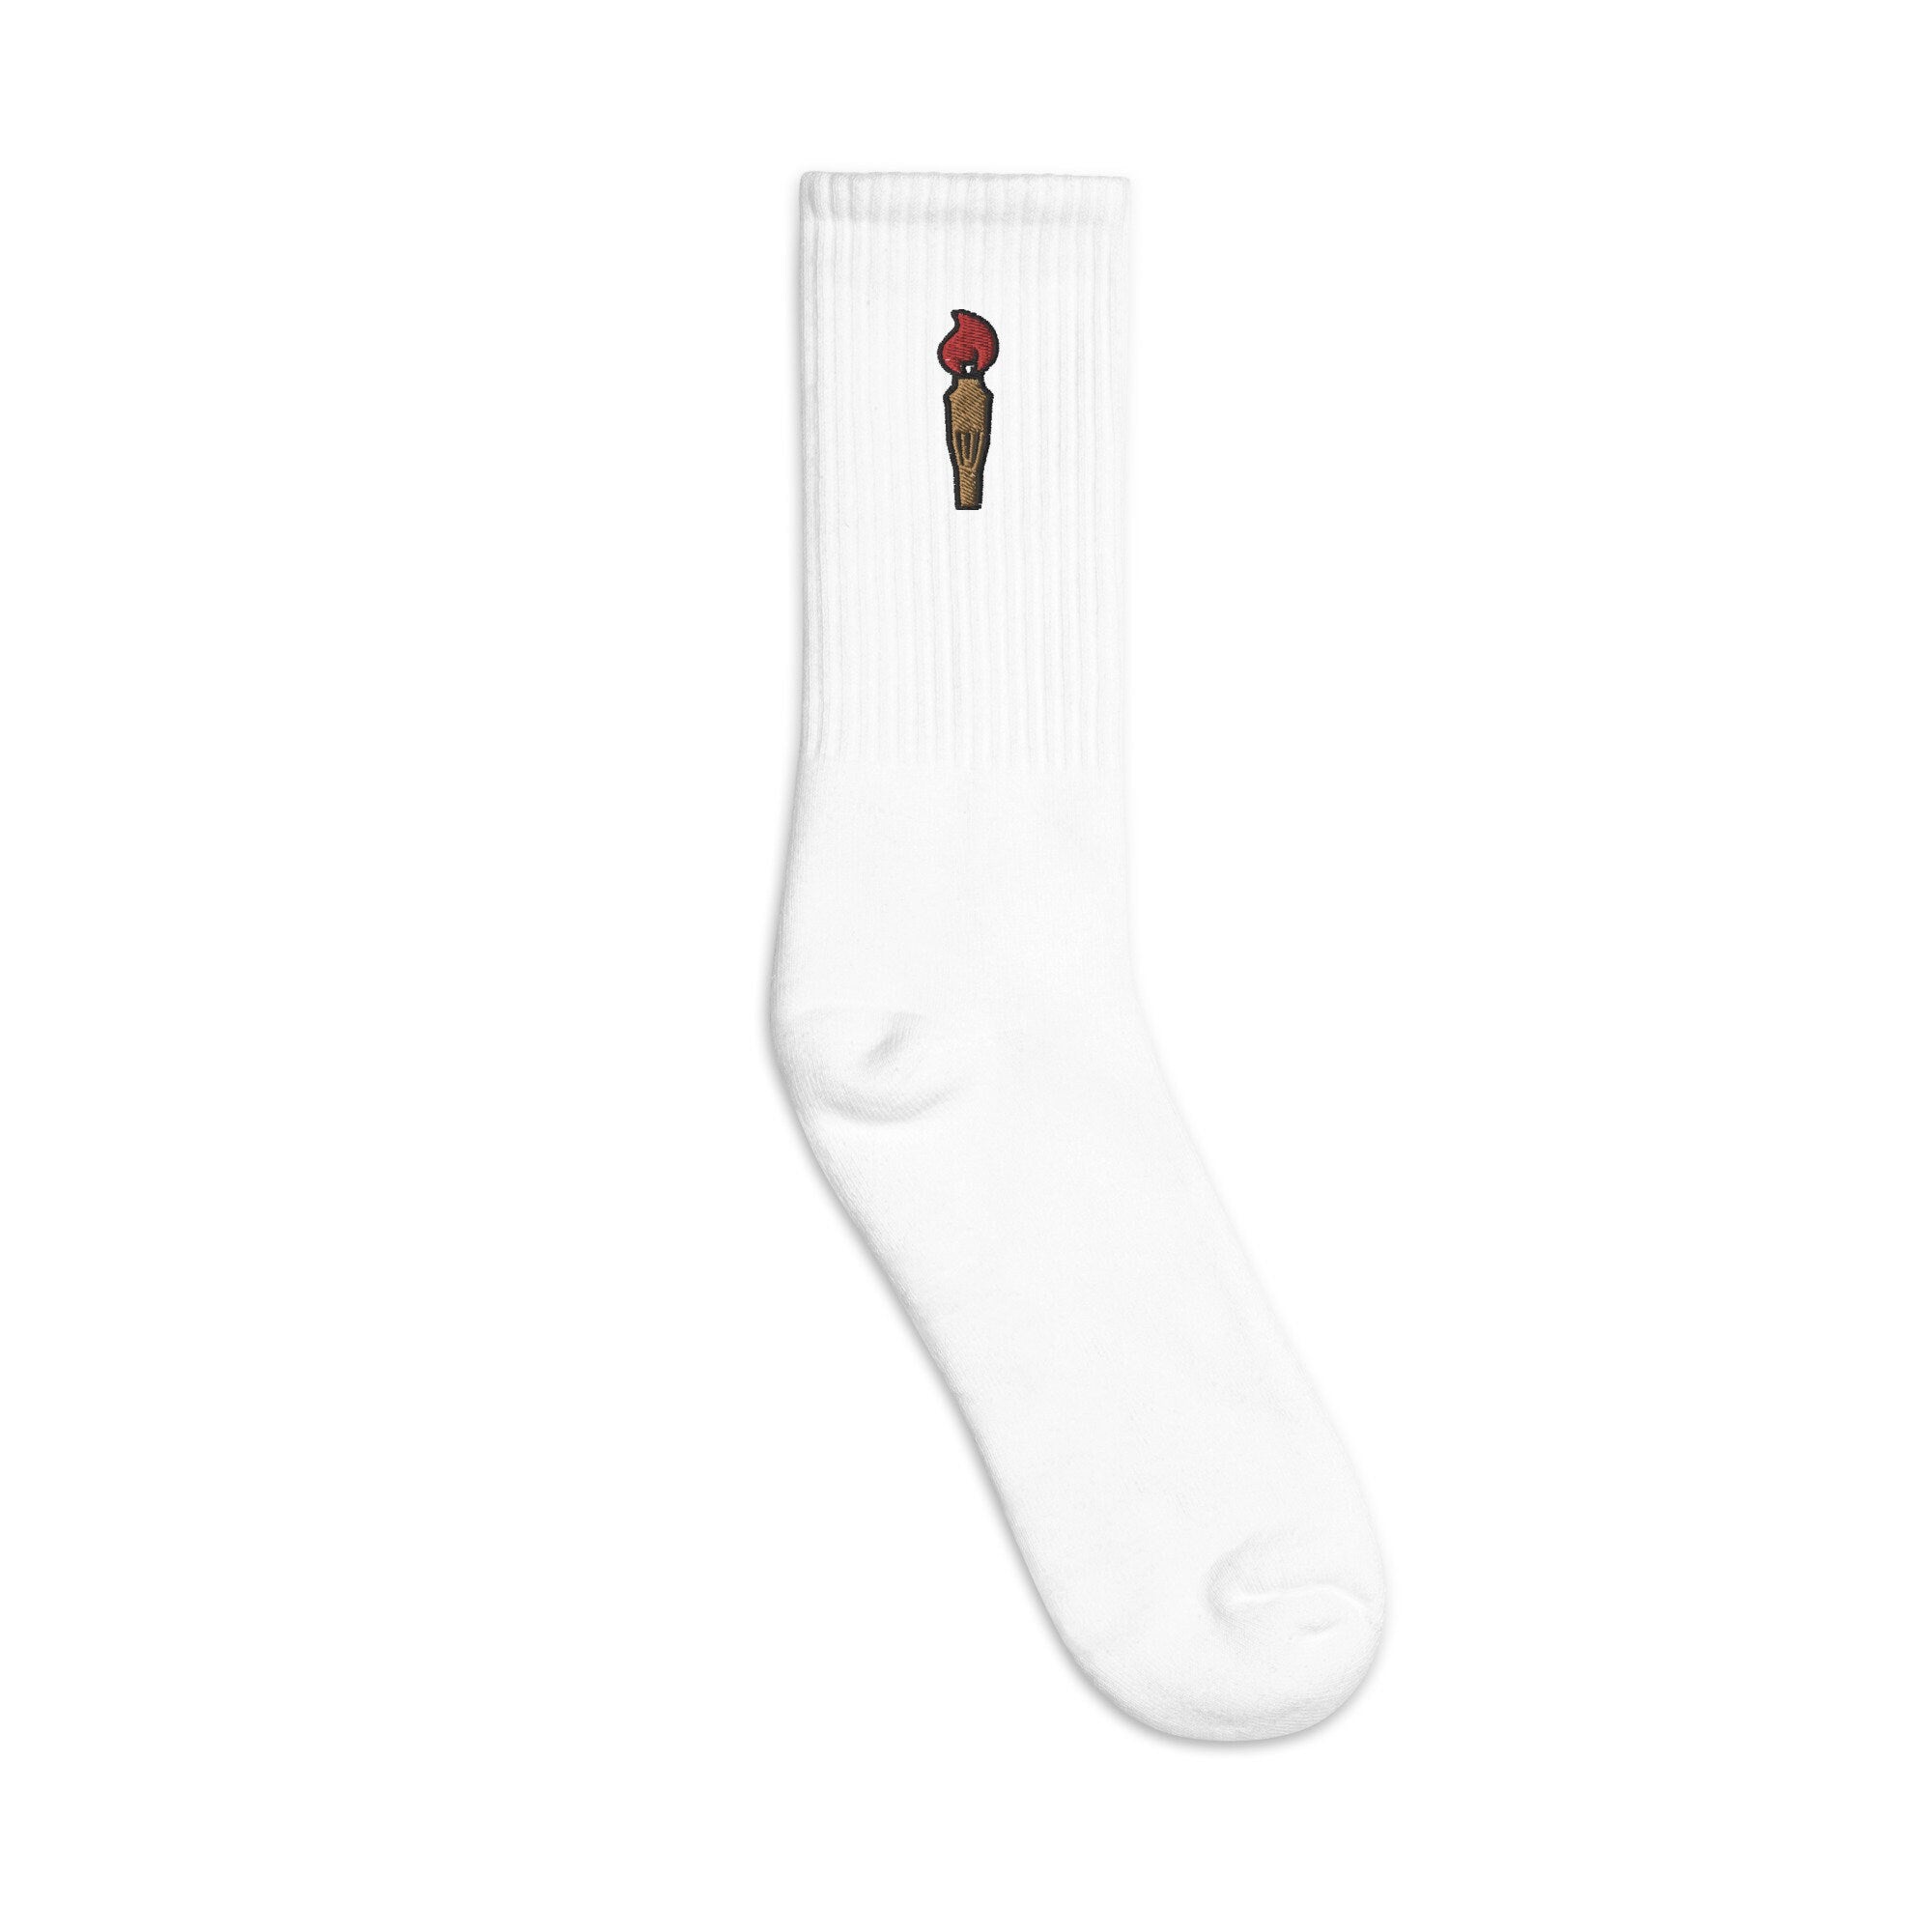 Tiki Torch Embroidered Socks, Premium Embroidered Socks, Long Socks Gift - Multiple Colors